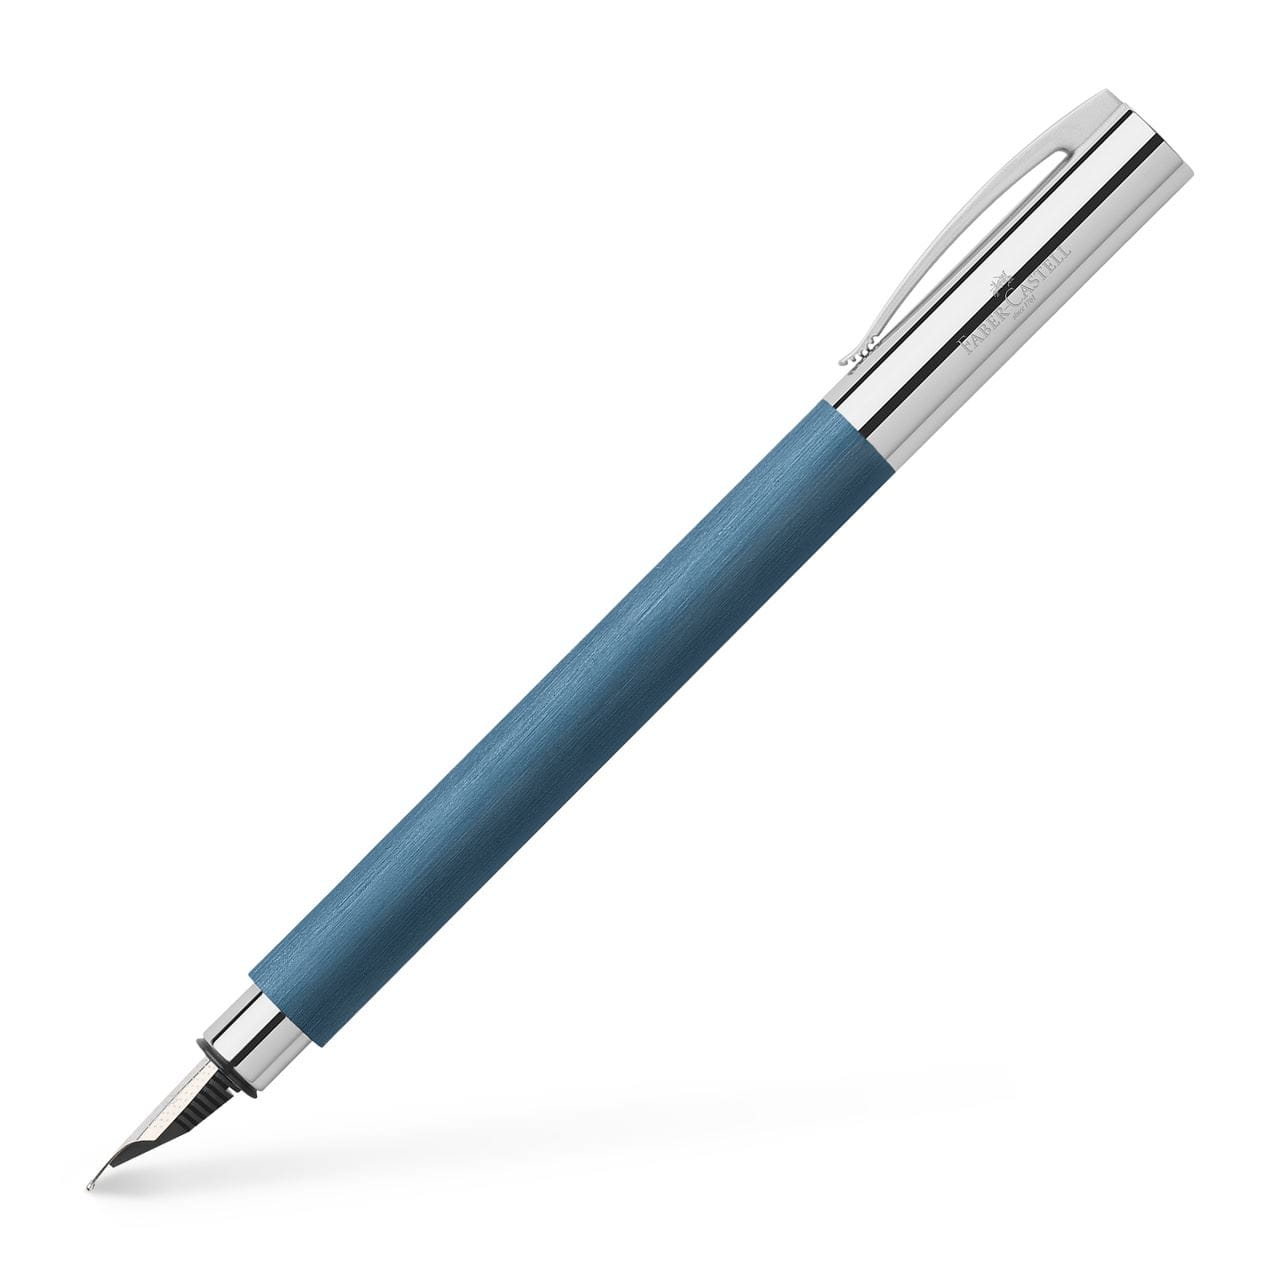 Faber-Castell - Pluma estilográfica Ambition resina, F, azul